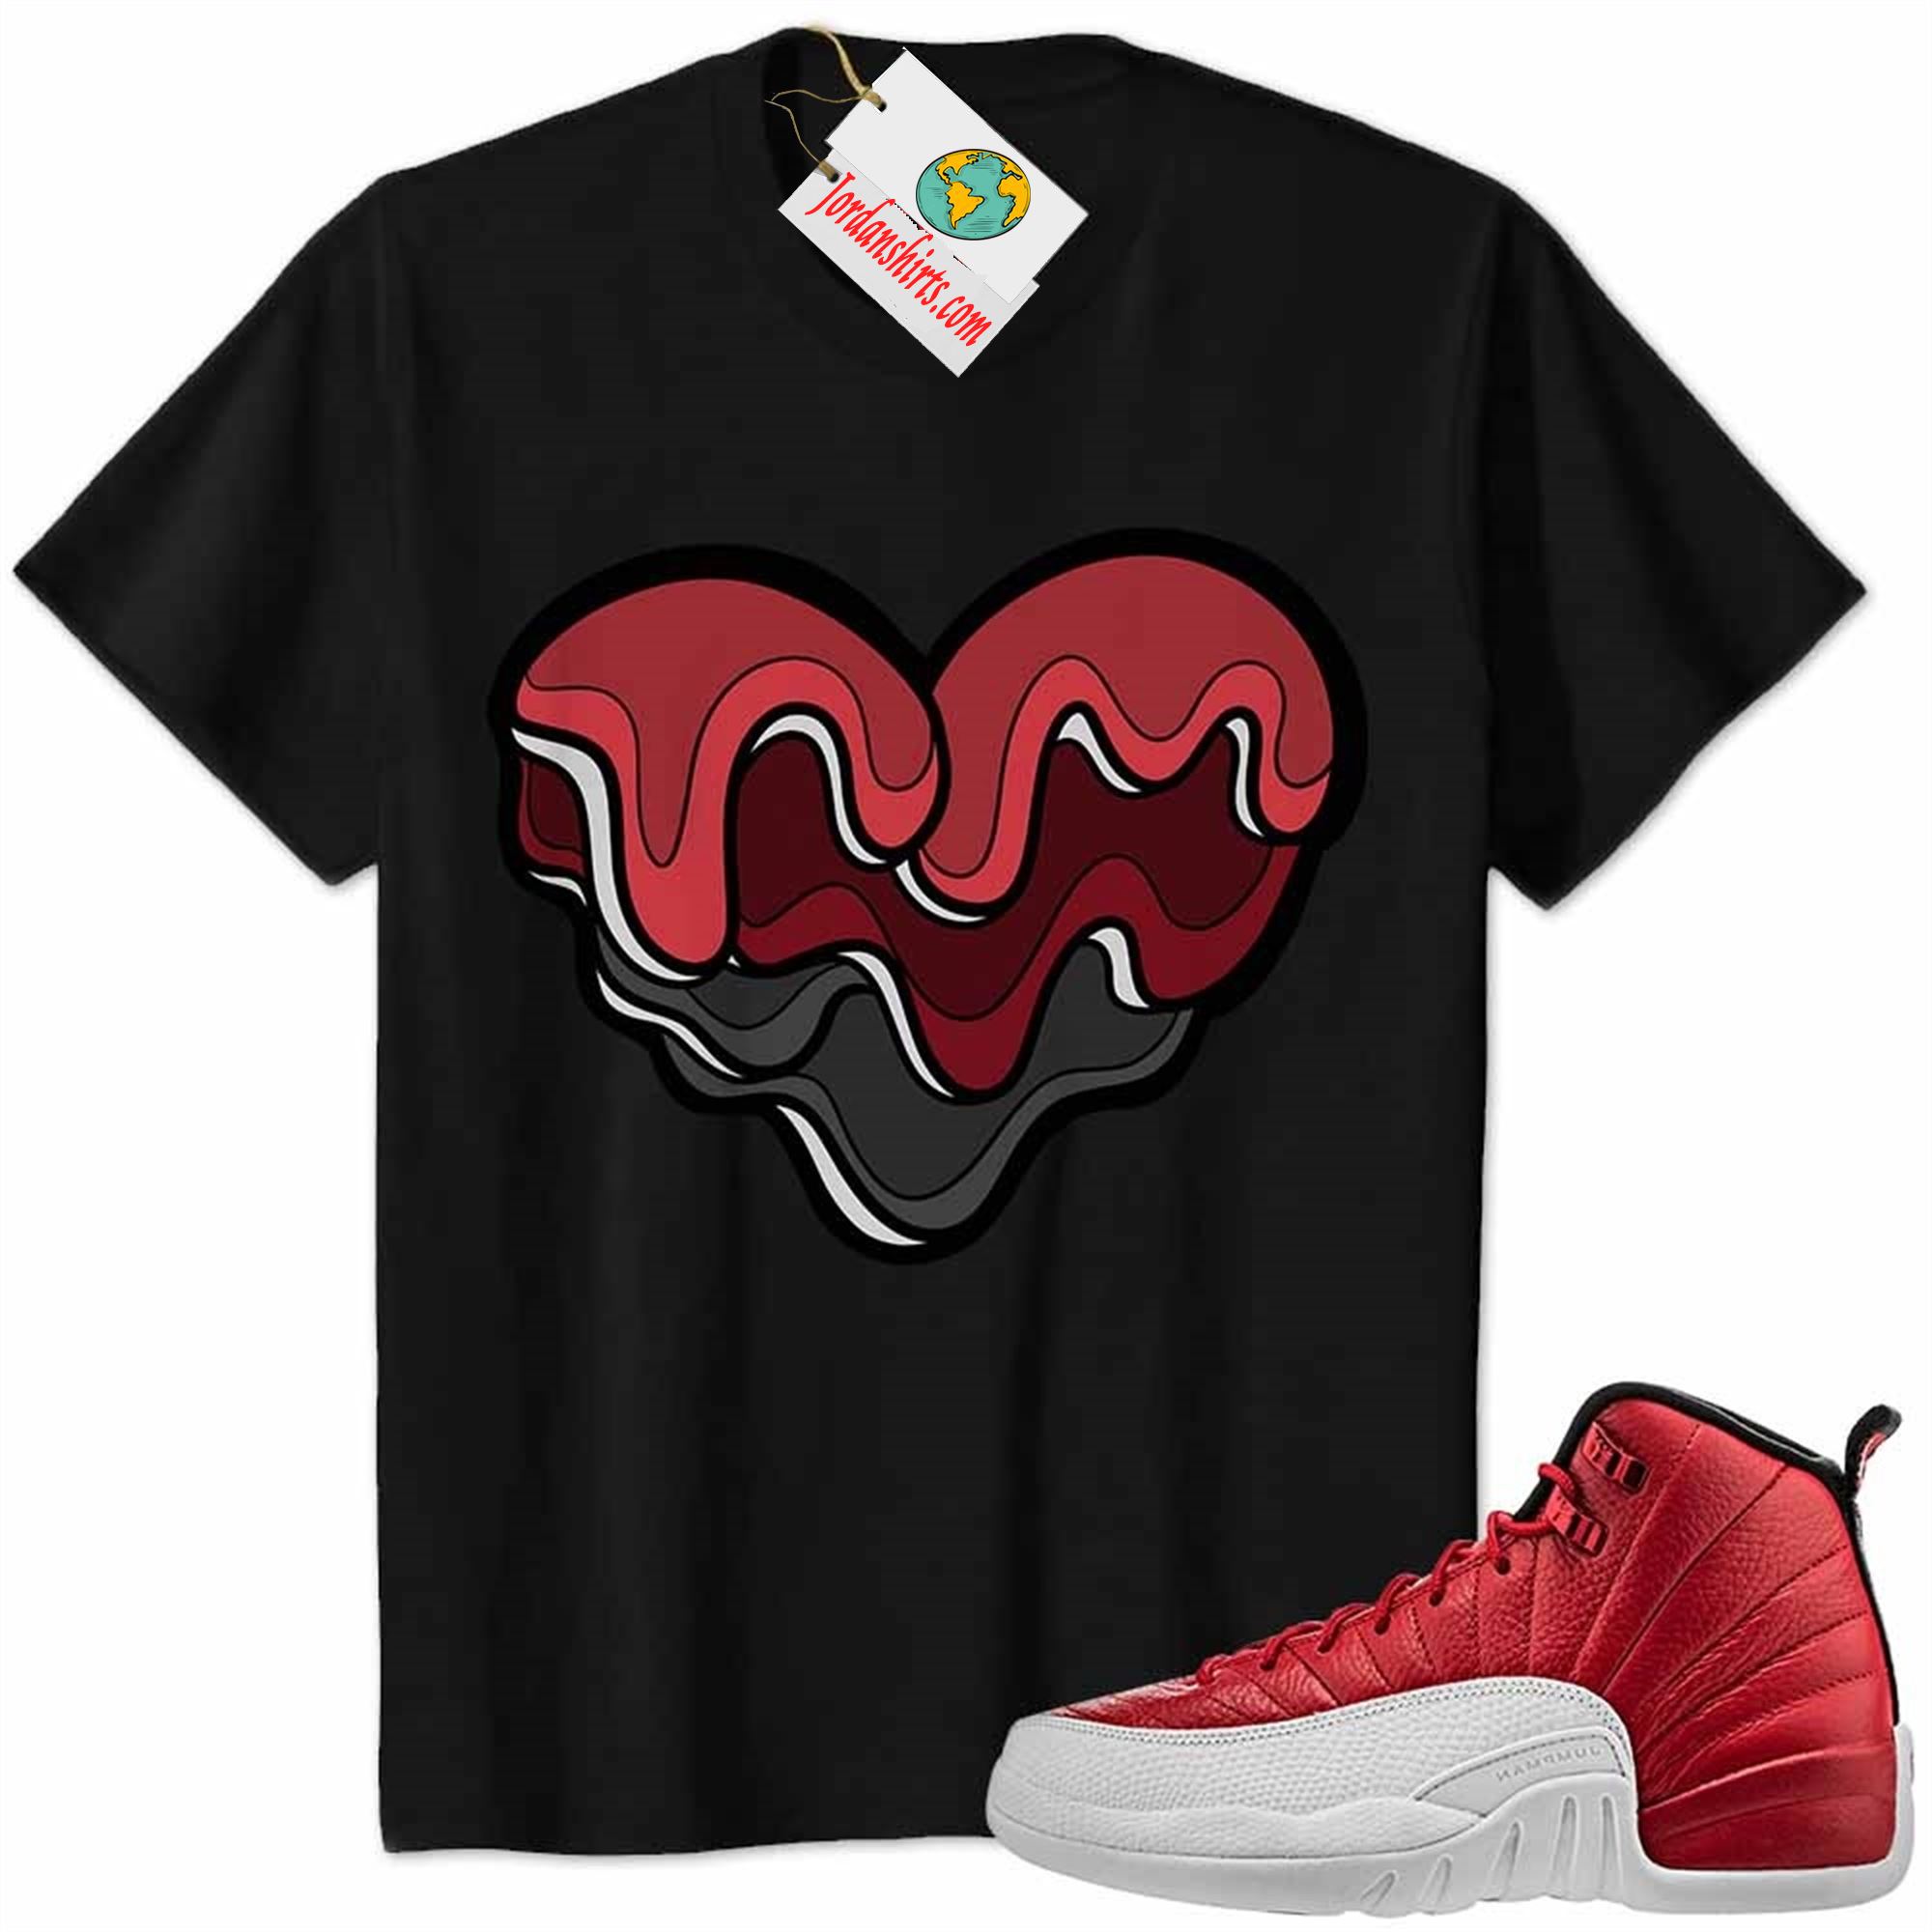 Jordan 12 Shirt, Melt Dripping Heart Black Air Jordan 12 Gym Red 12s Plus Size Up To 5xl